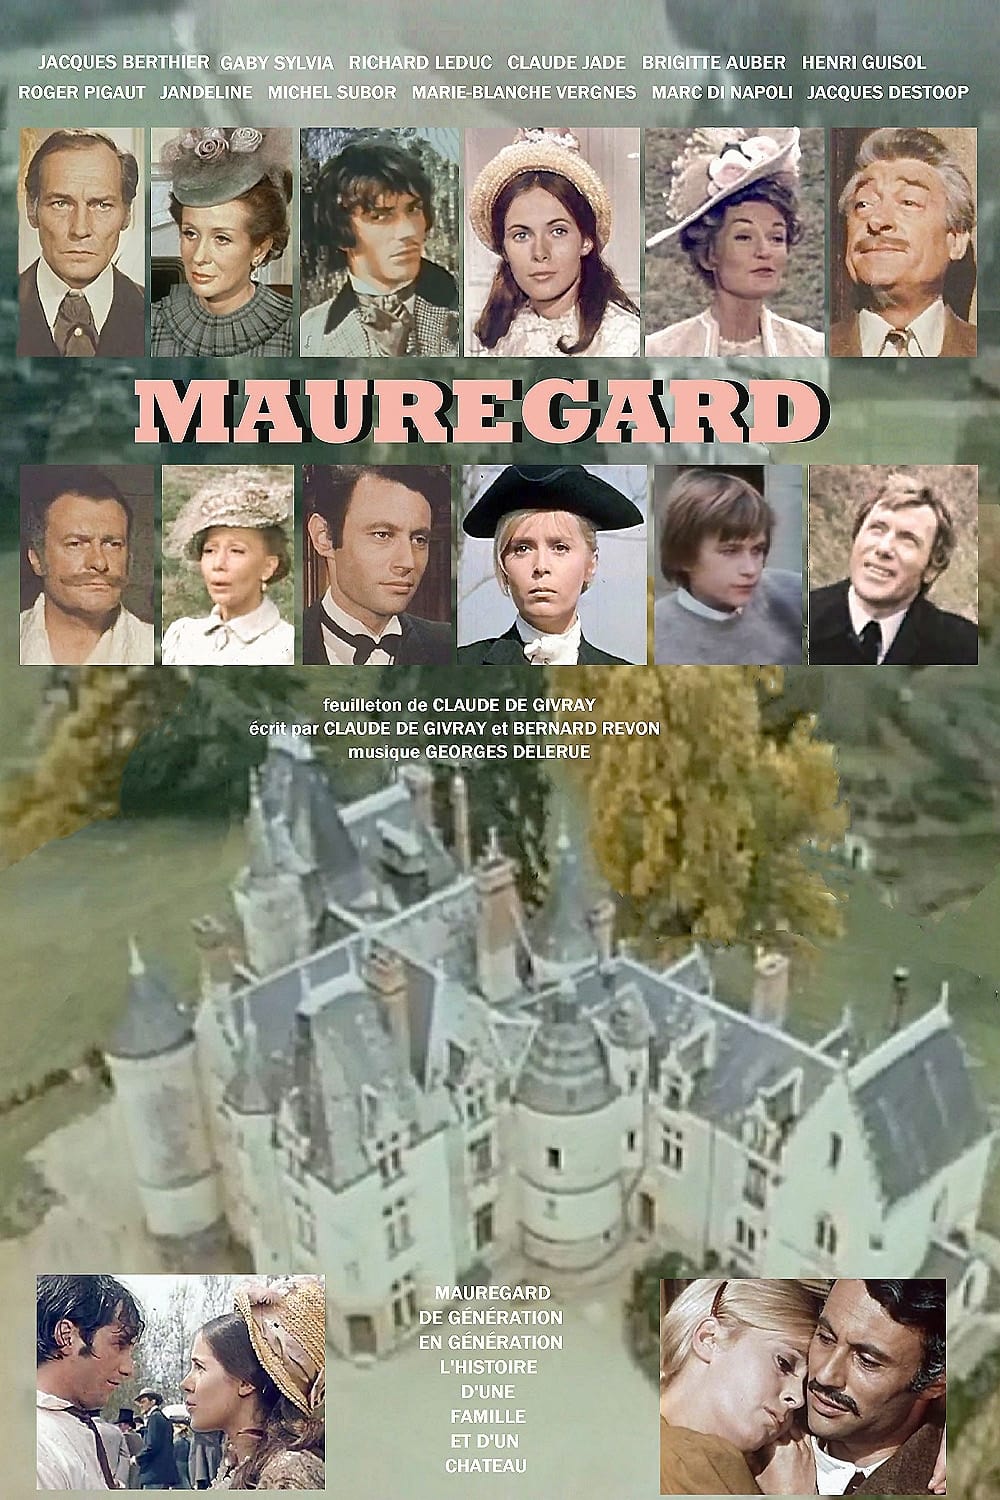 Mauregard (1970)